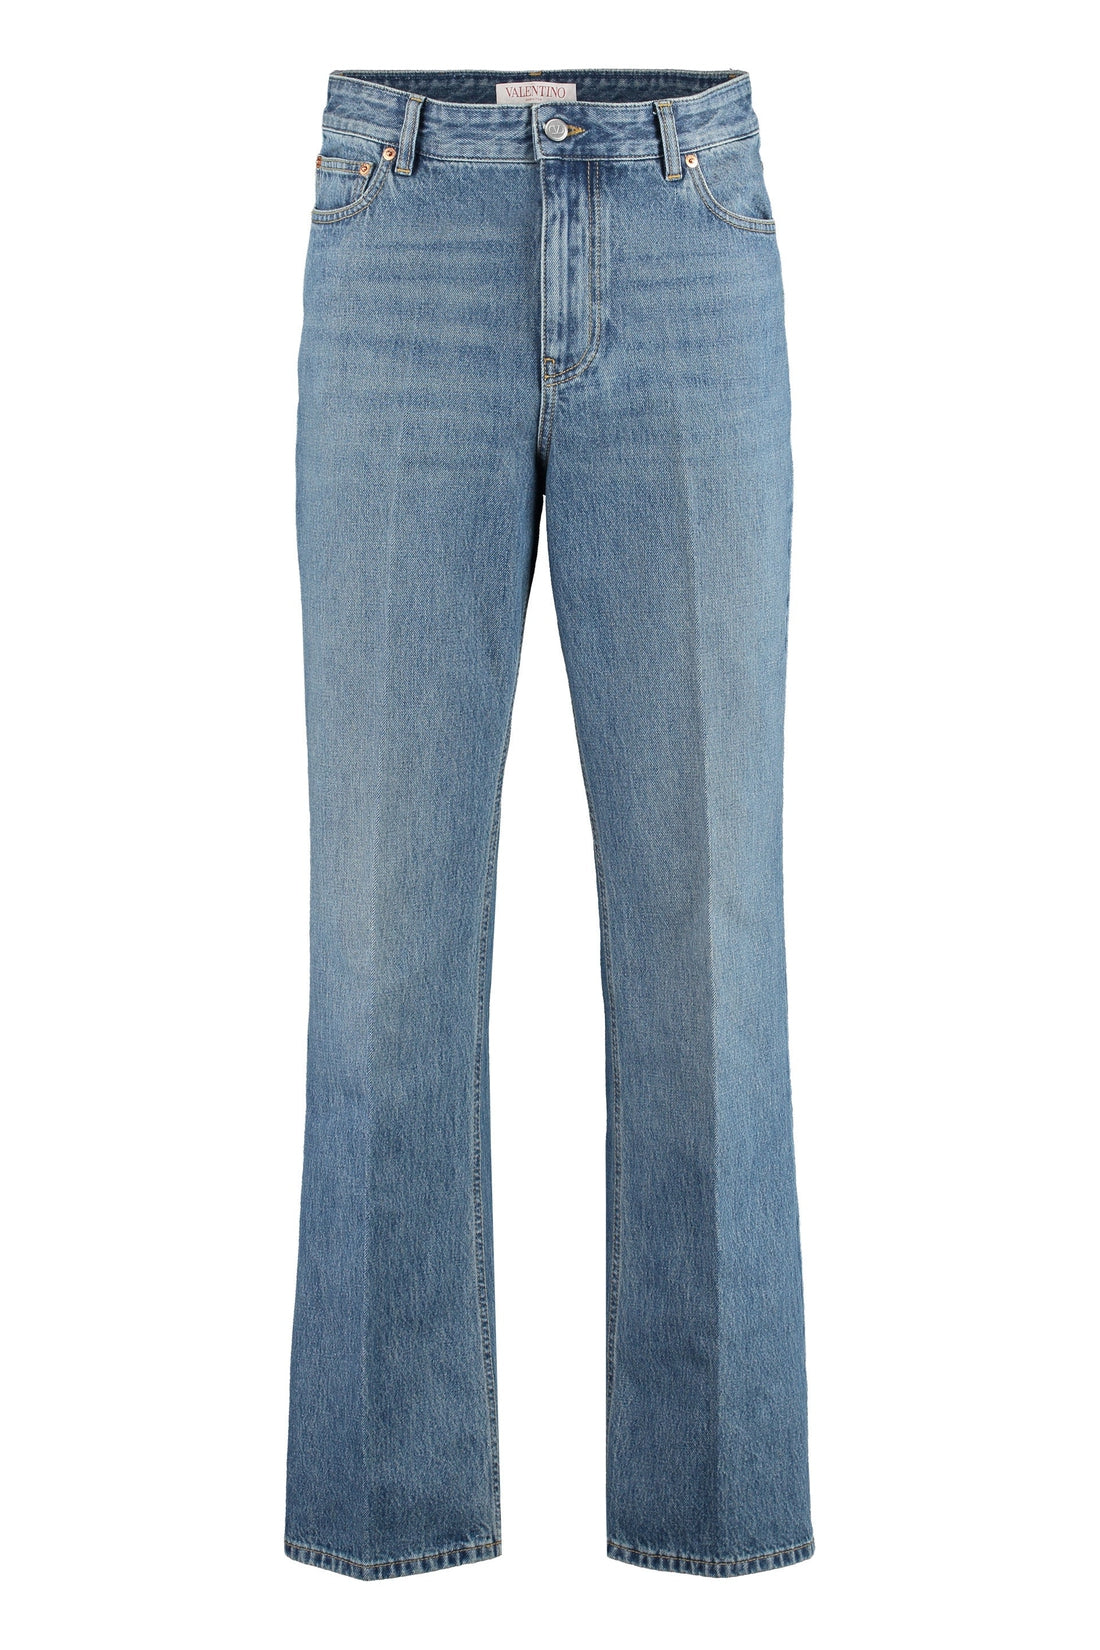 Valentino-OUTLET-SALE-5-pocket straight-leg jeans-ARCHIVIST